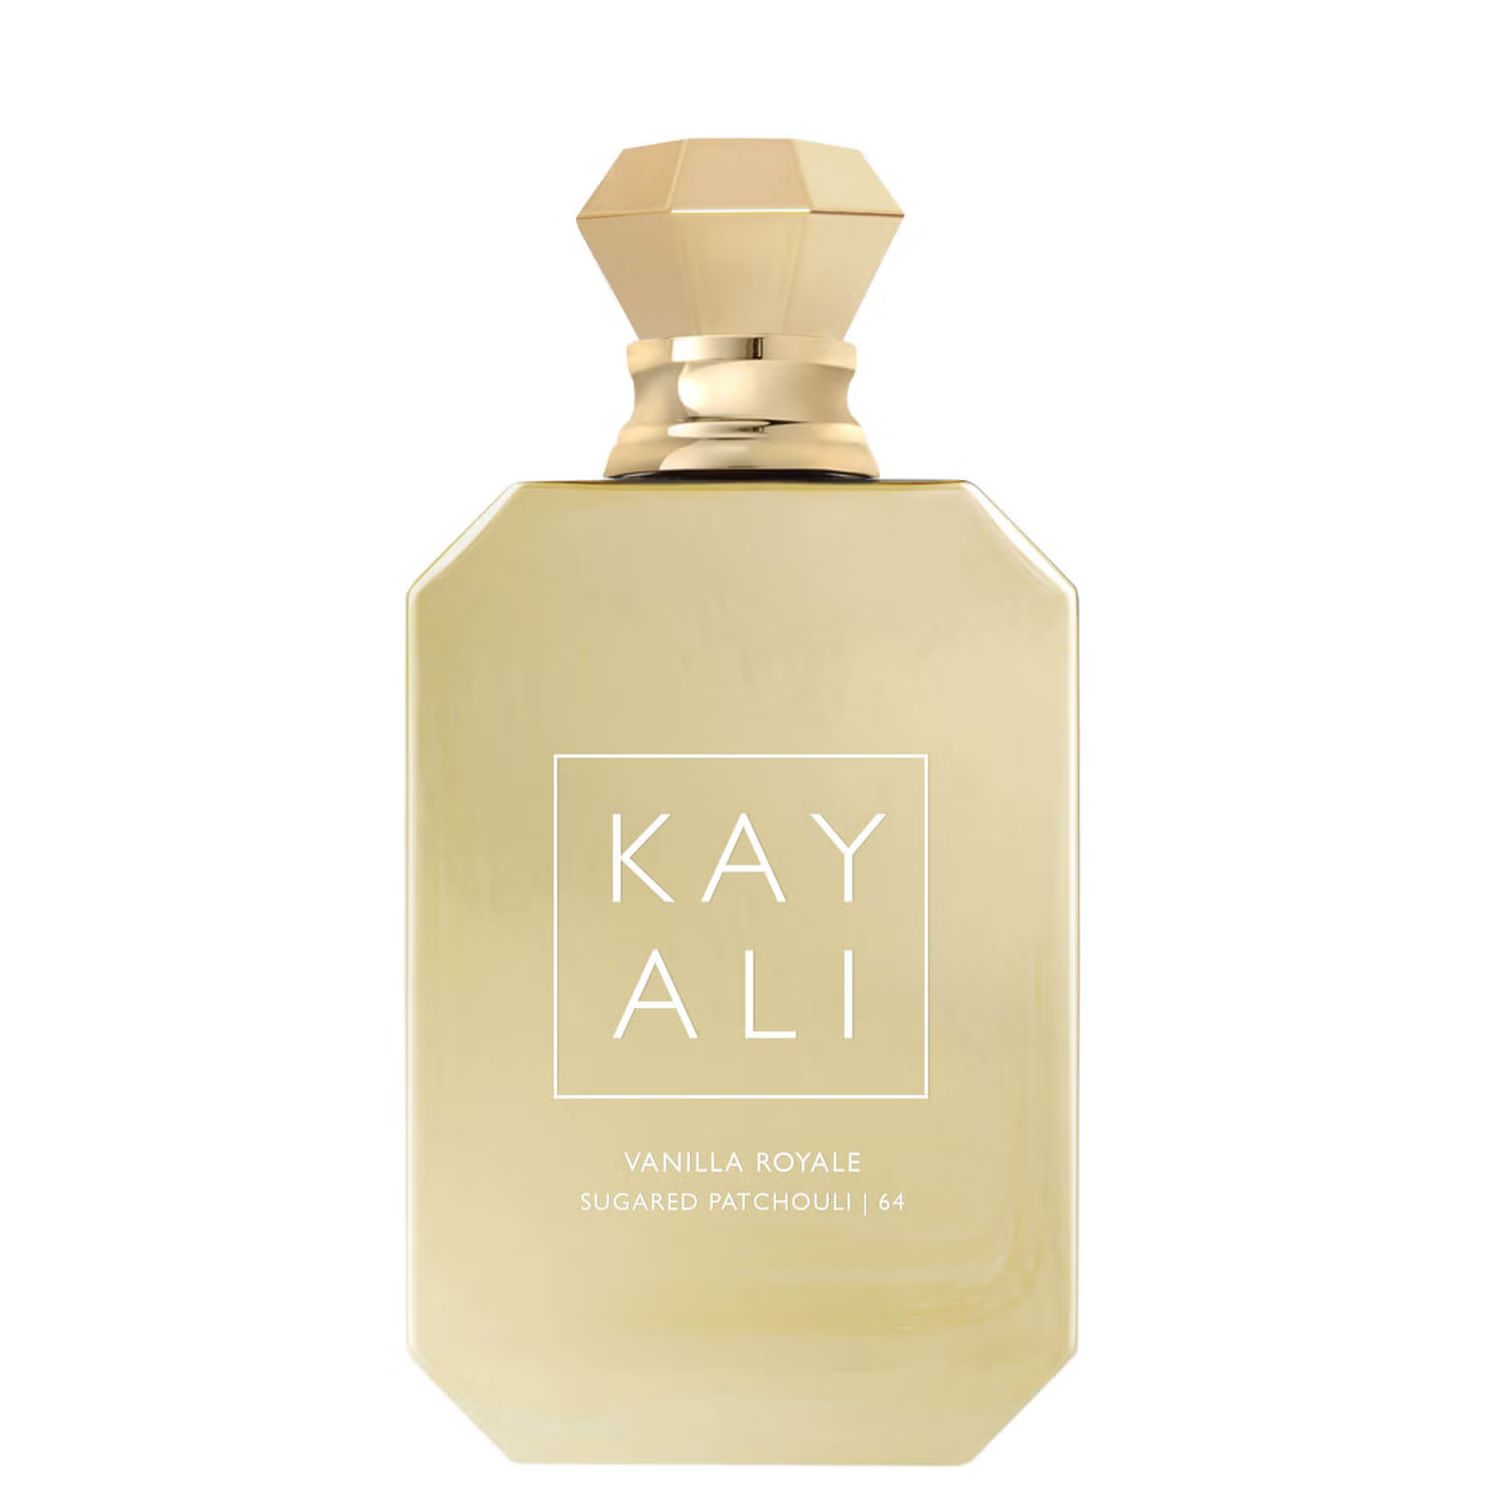 KAYALI Vanilla Royale Sugared Patchouli 64 Eau de Parfum Intense - 50ml | Cult Beauty